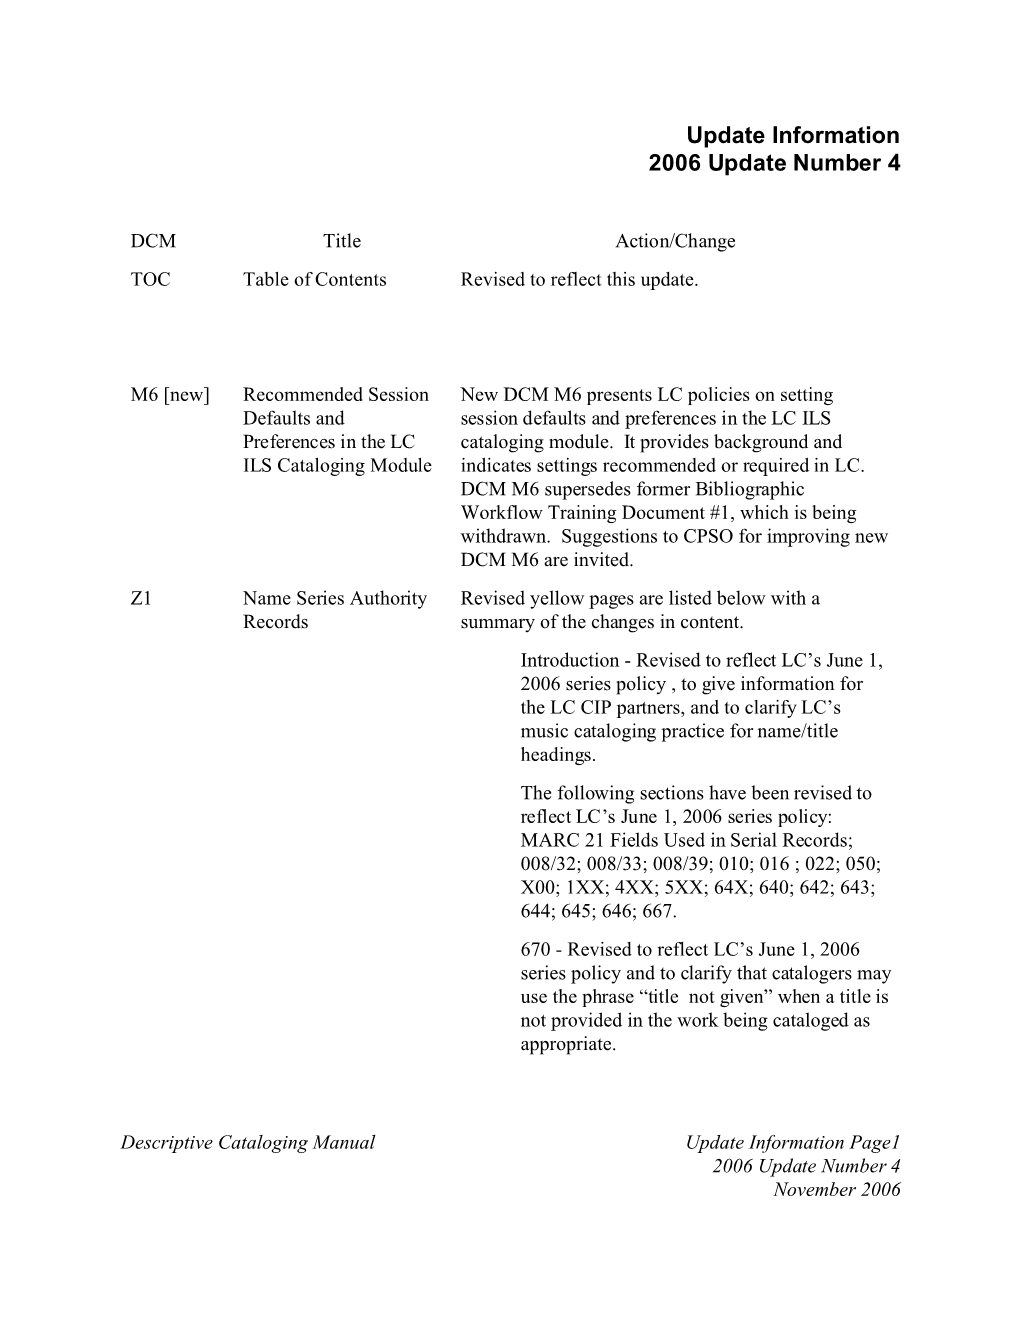 Descriptive Cataloging Manual 2006 Update 4